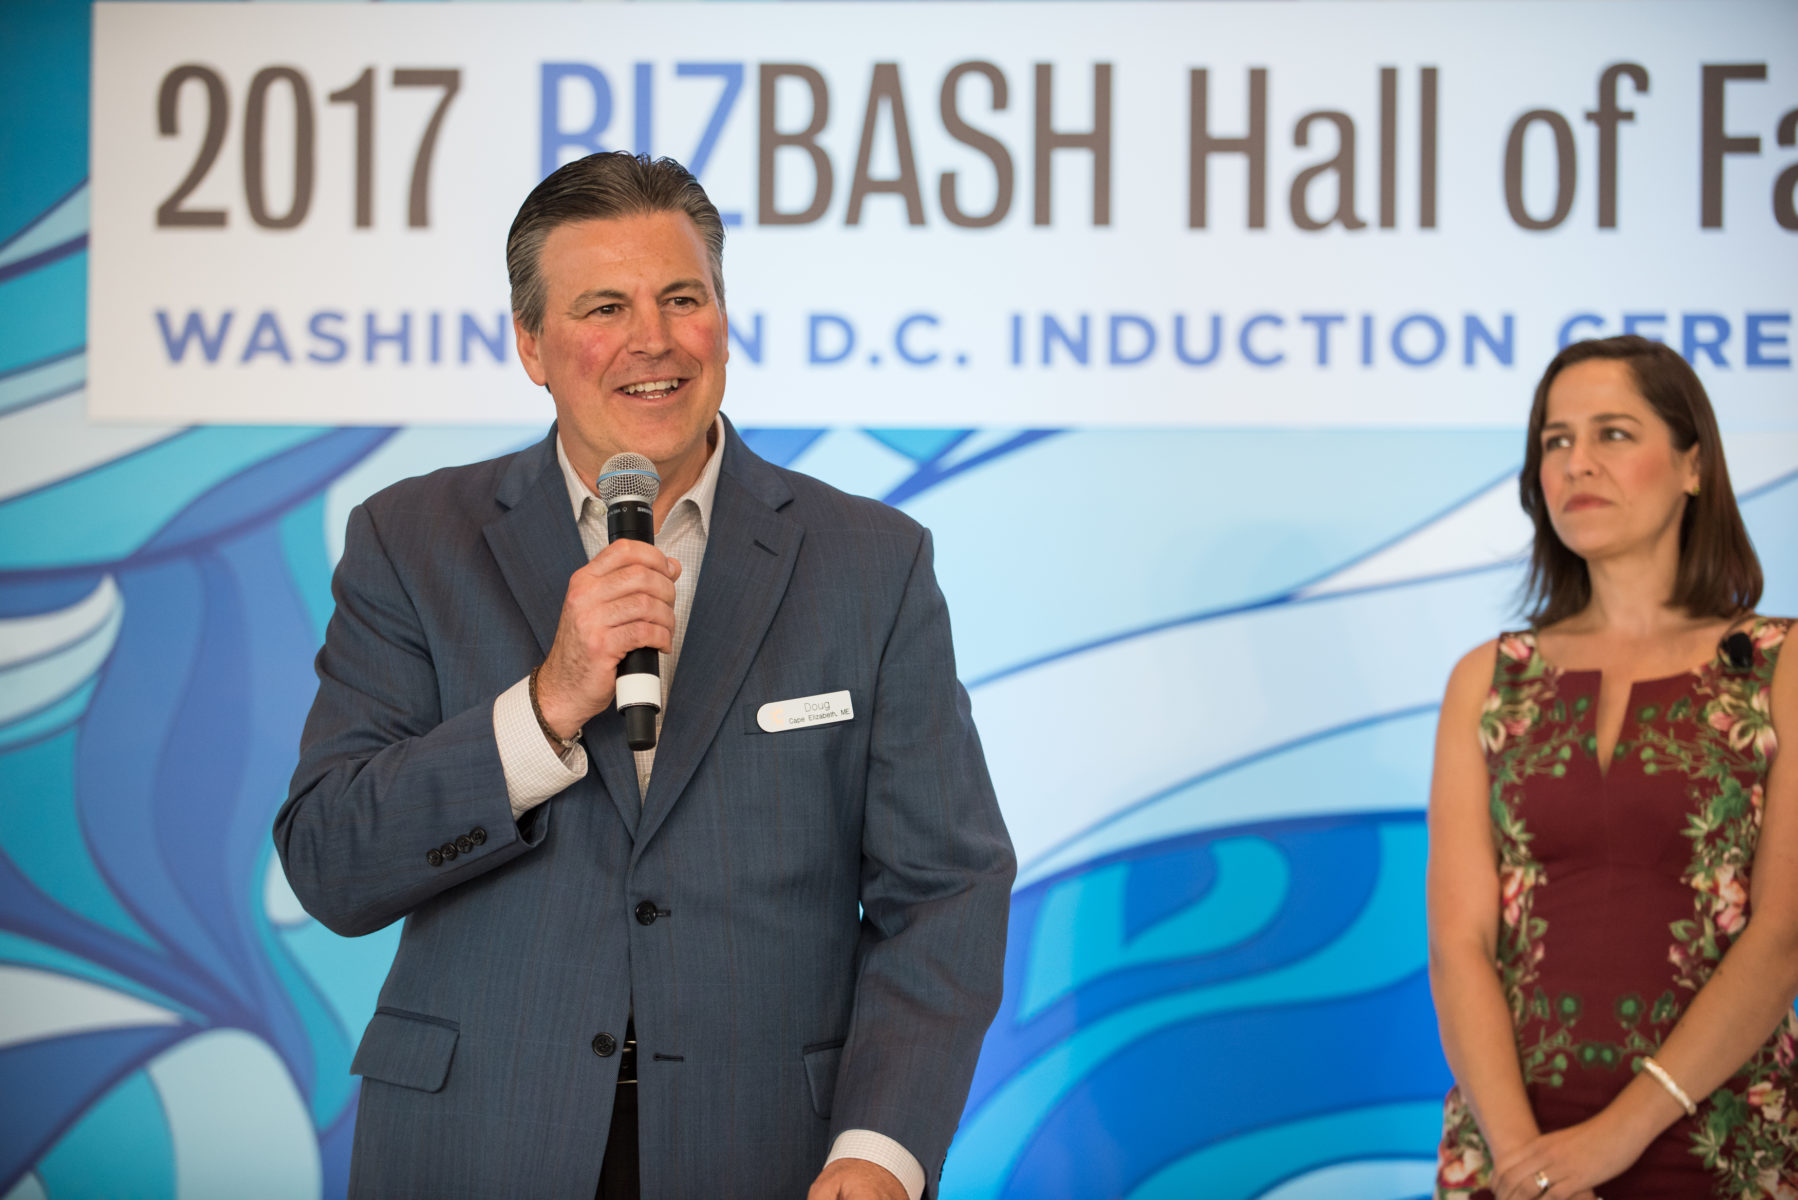 BizBash Hall of Fame Induction Cermony